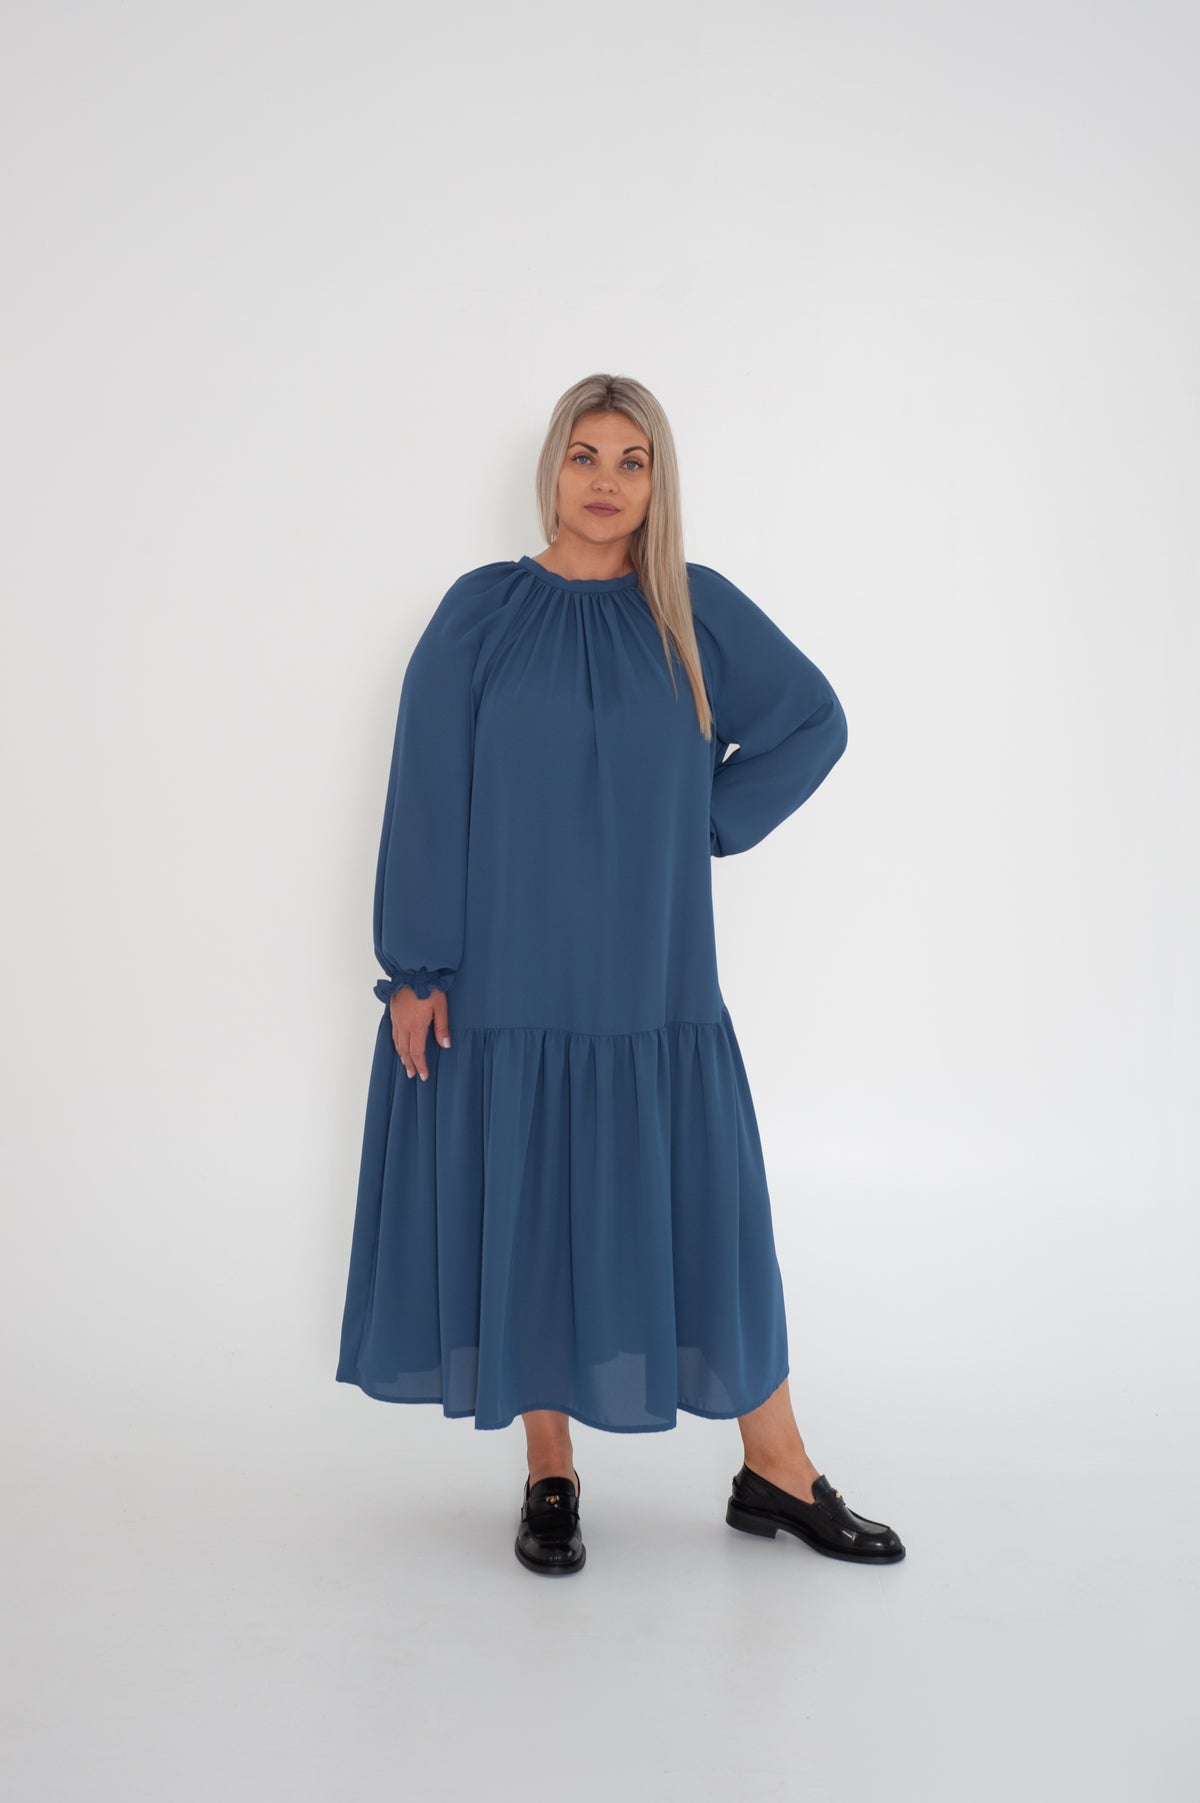 Grey-blue midi dress